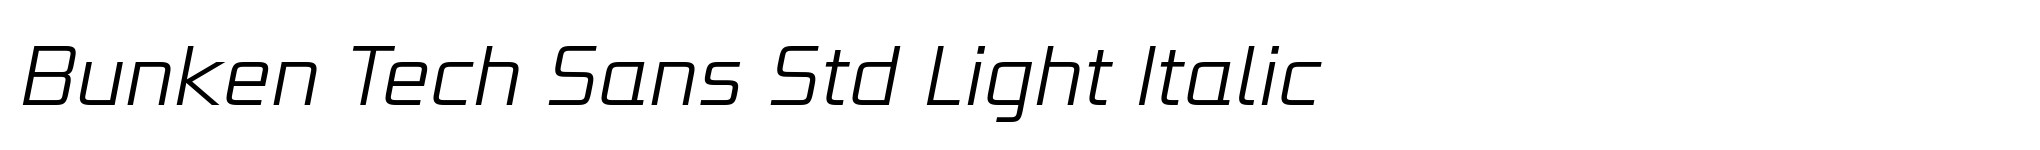 Bunken Tech Sans Std Light Italic image